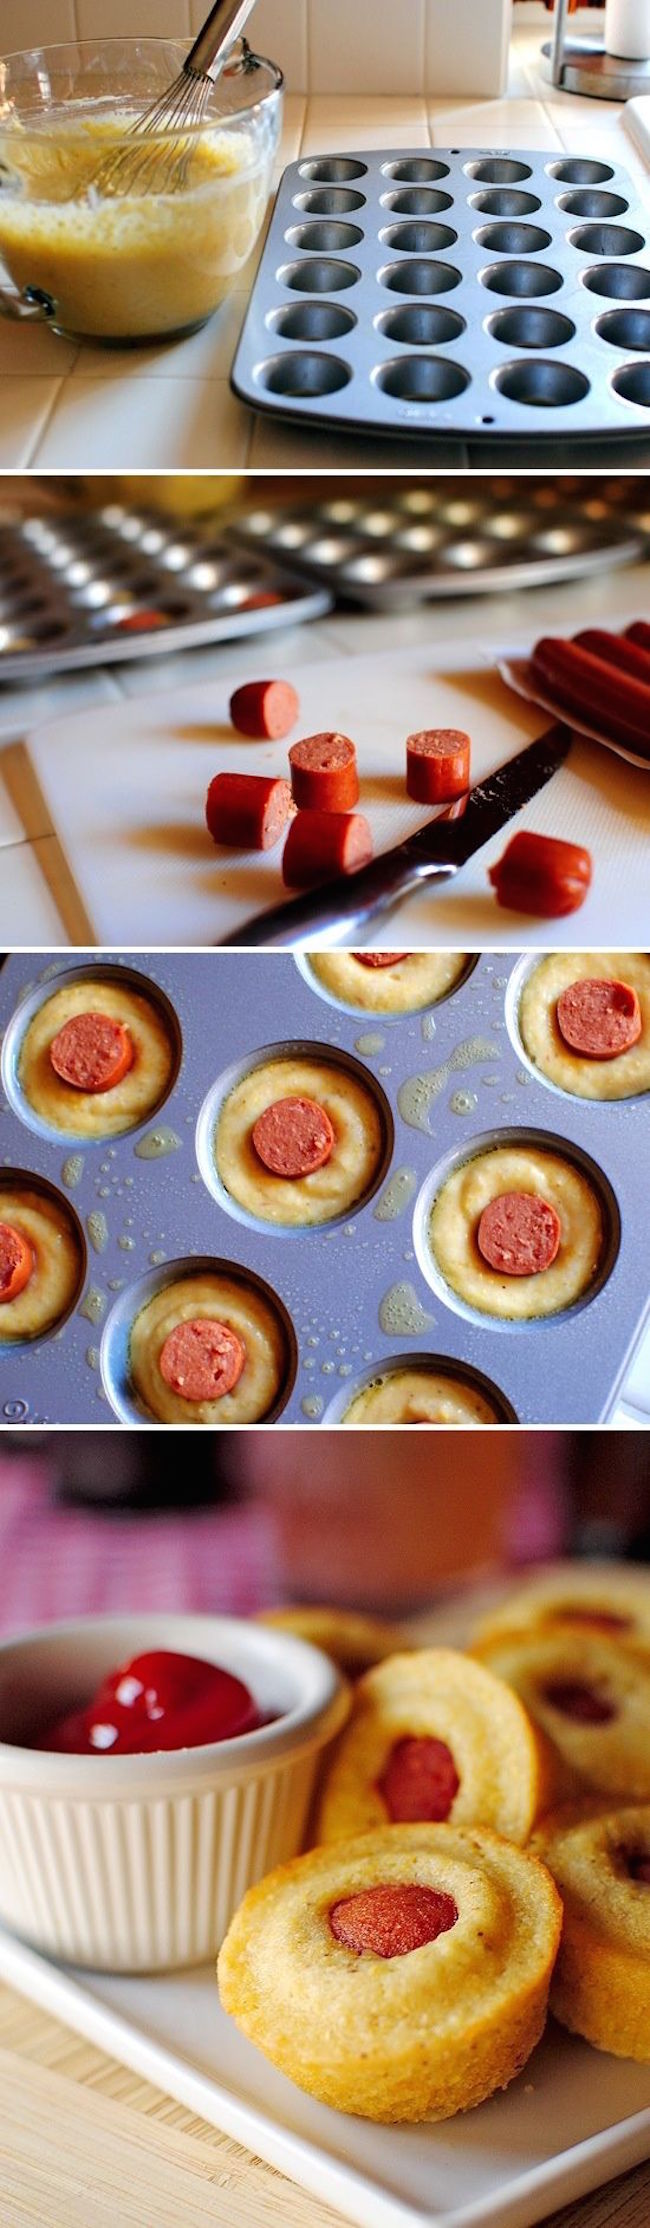 How to make mini corn dog muffins plus 15 genius hot dog hacks!